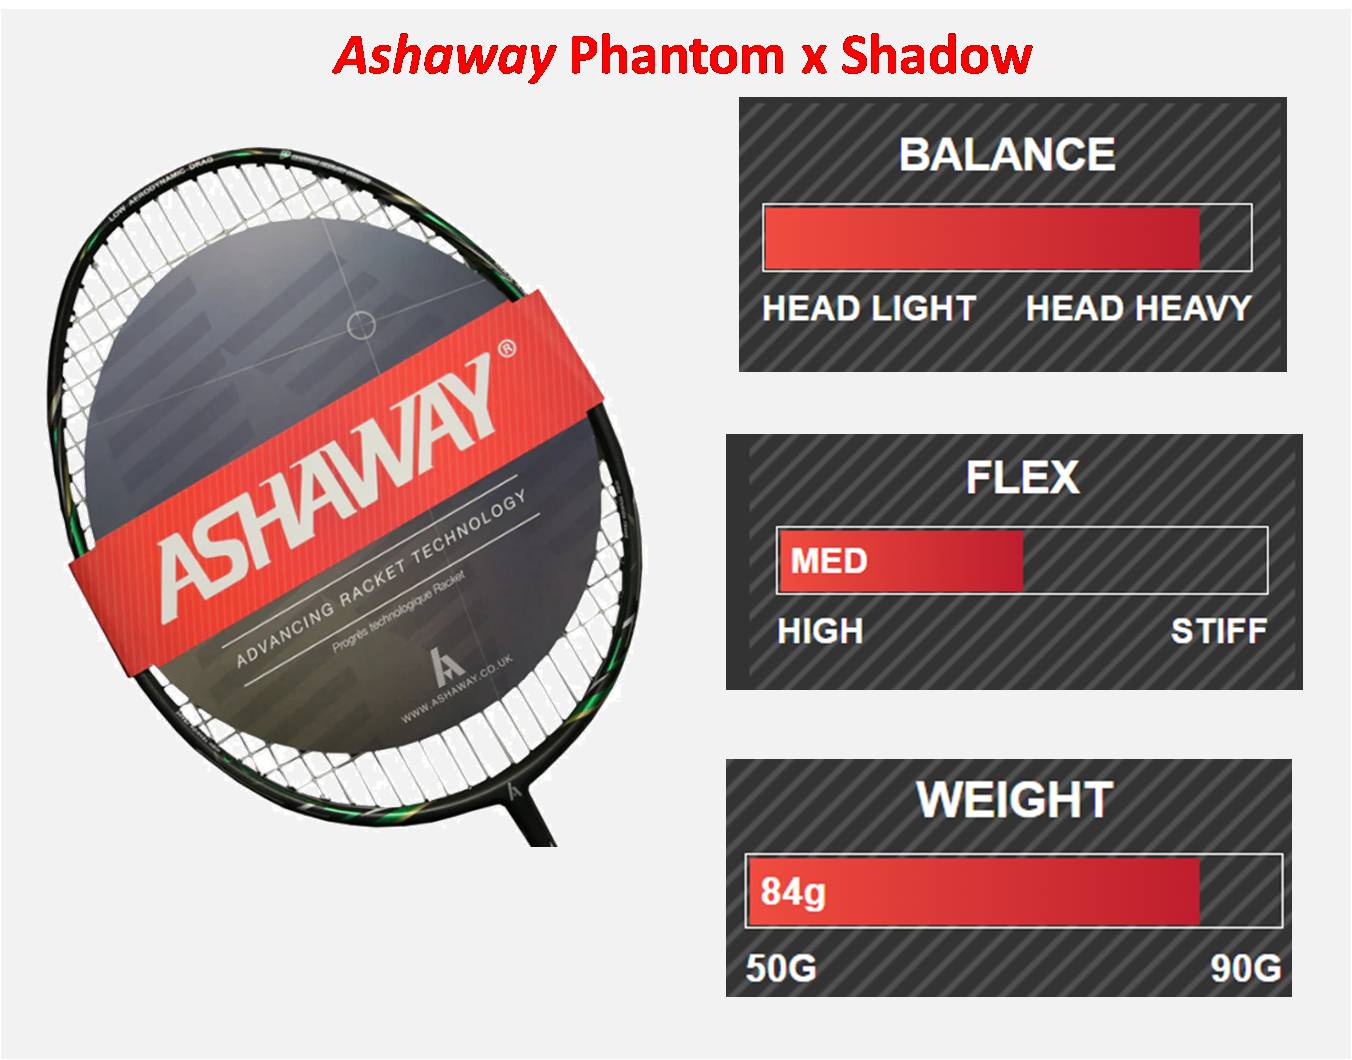 Ashaway_Phantom_x_Shadow